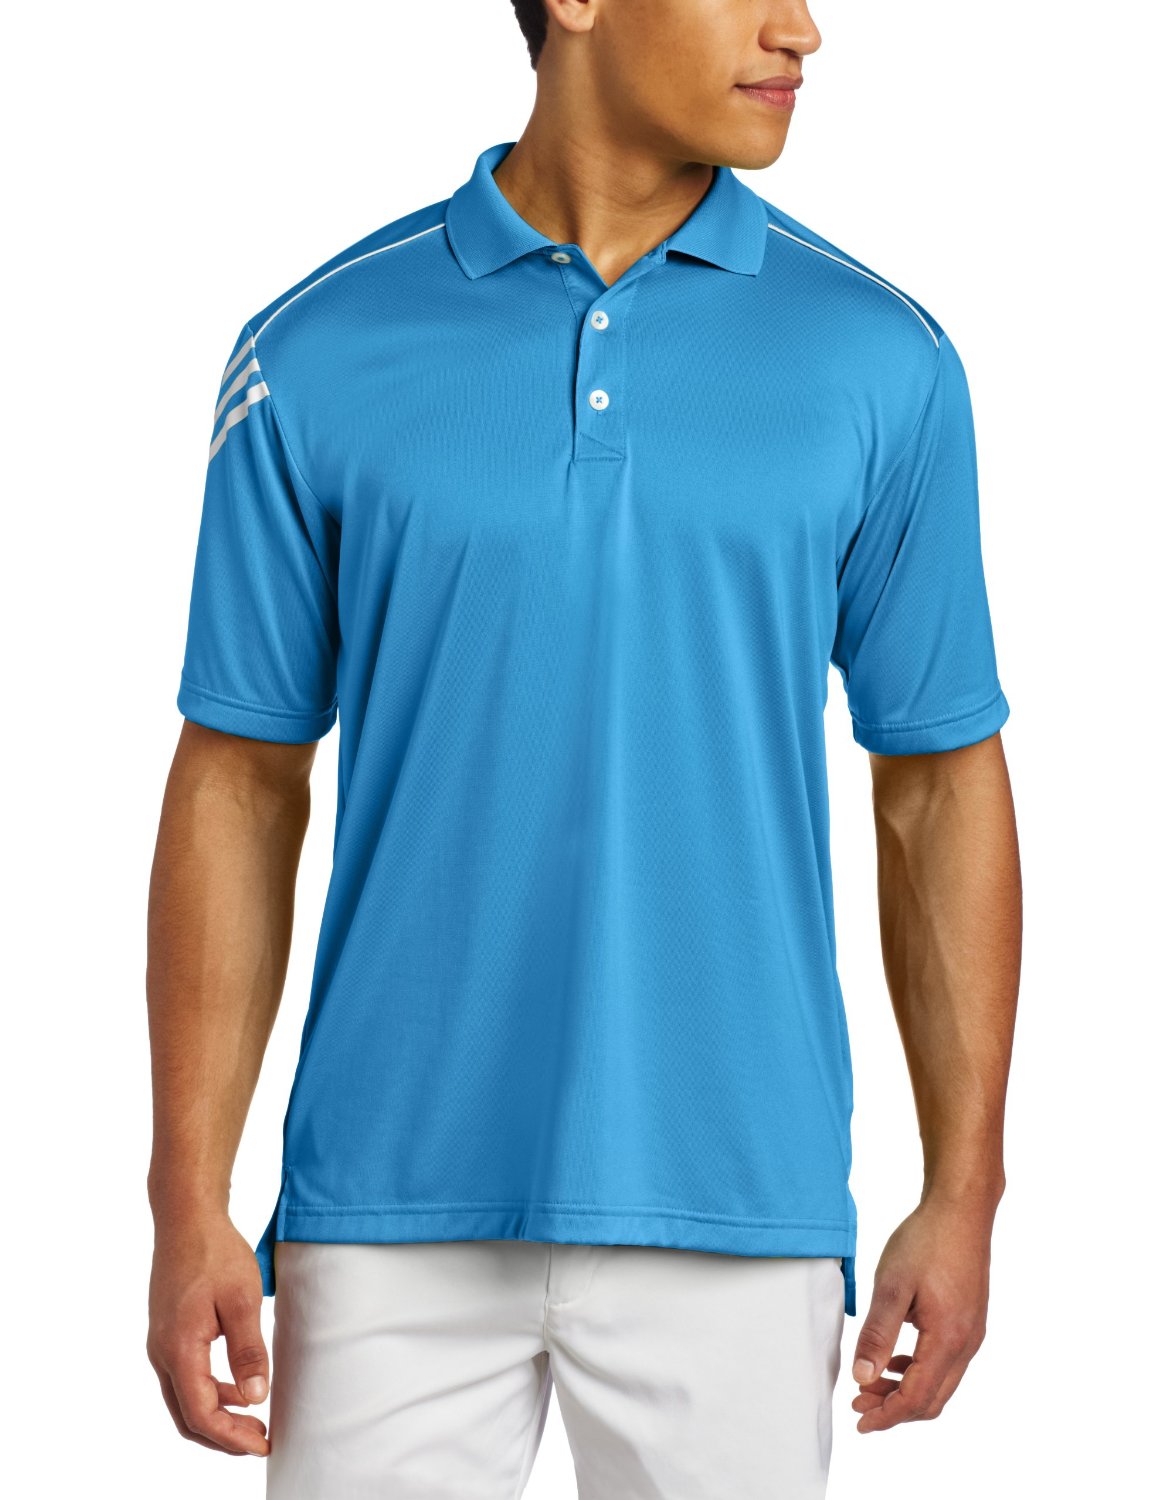 Mens Adidas ClimaCool 3 Stripes Golf Polo Shirts